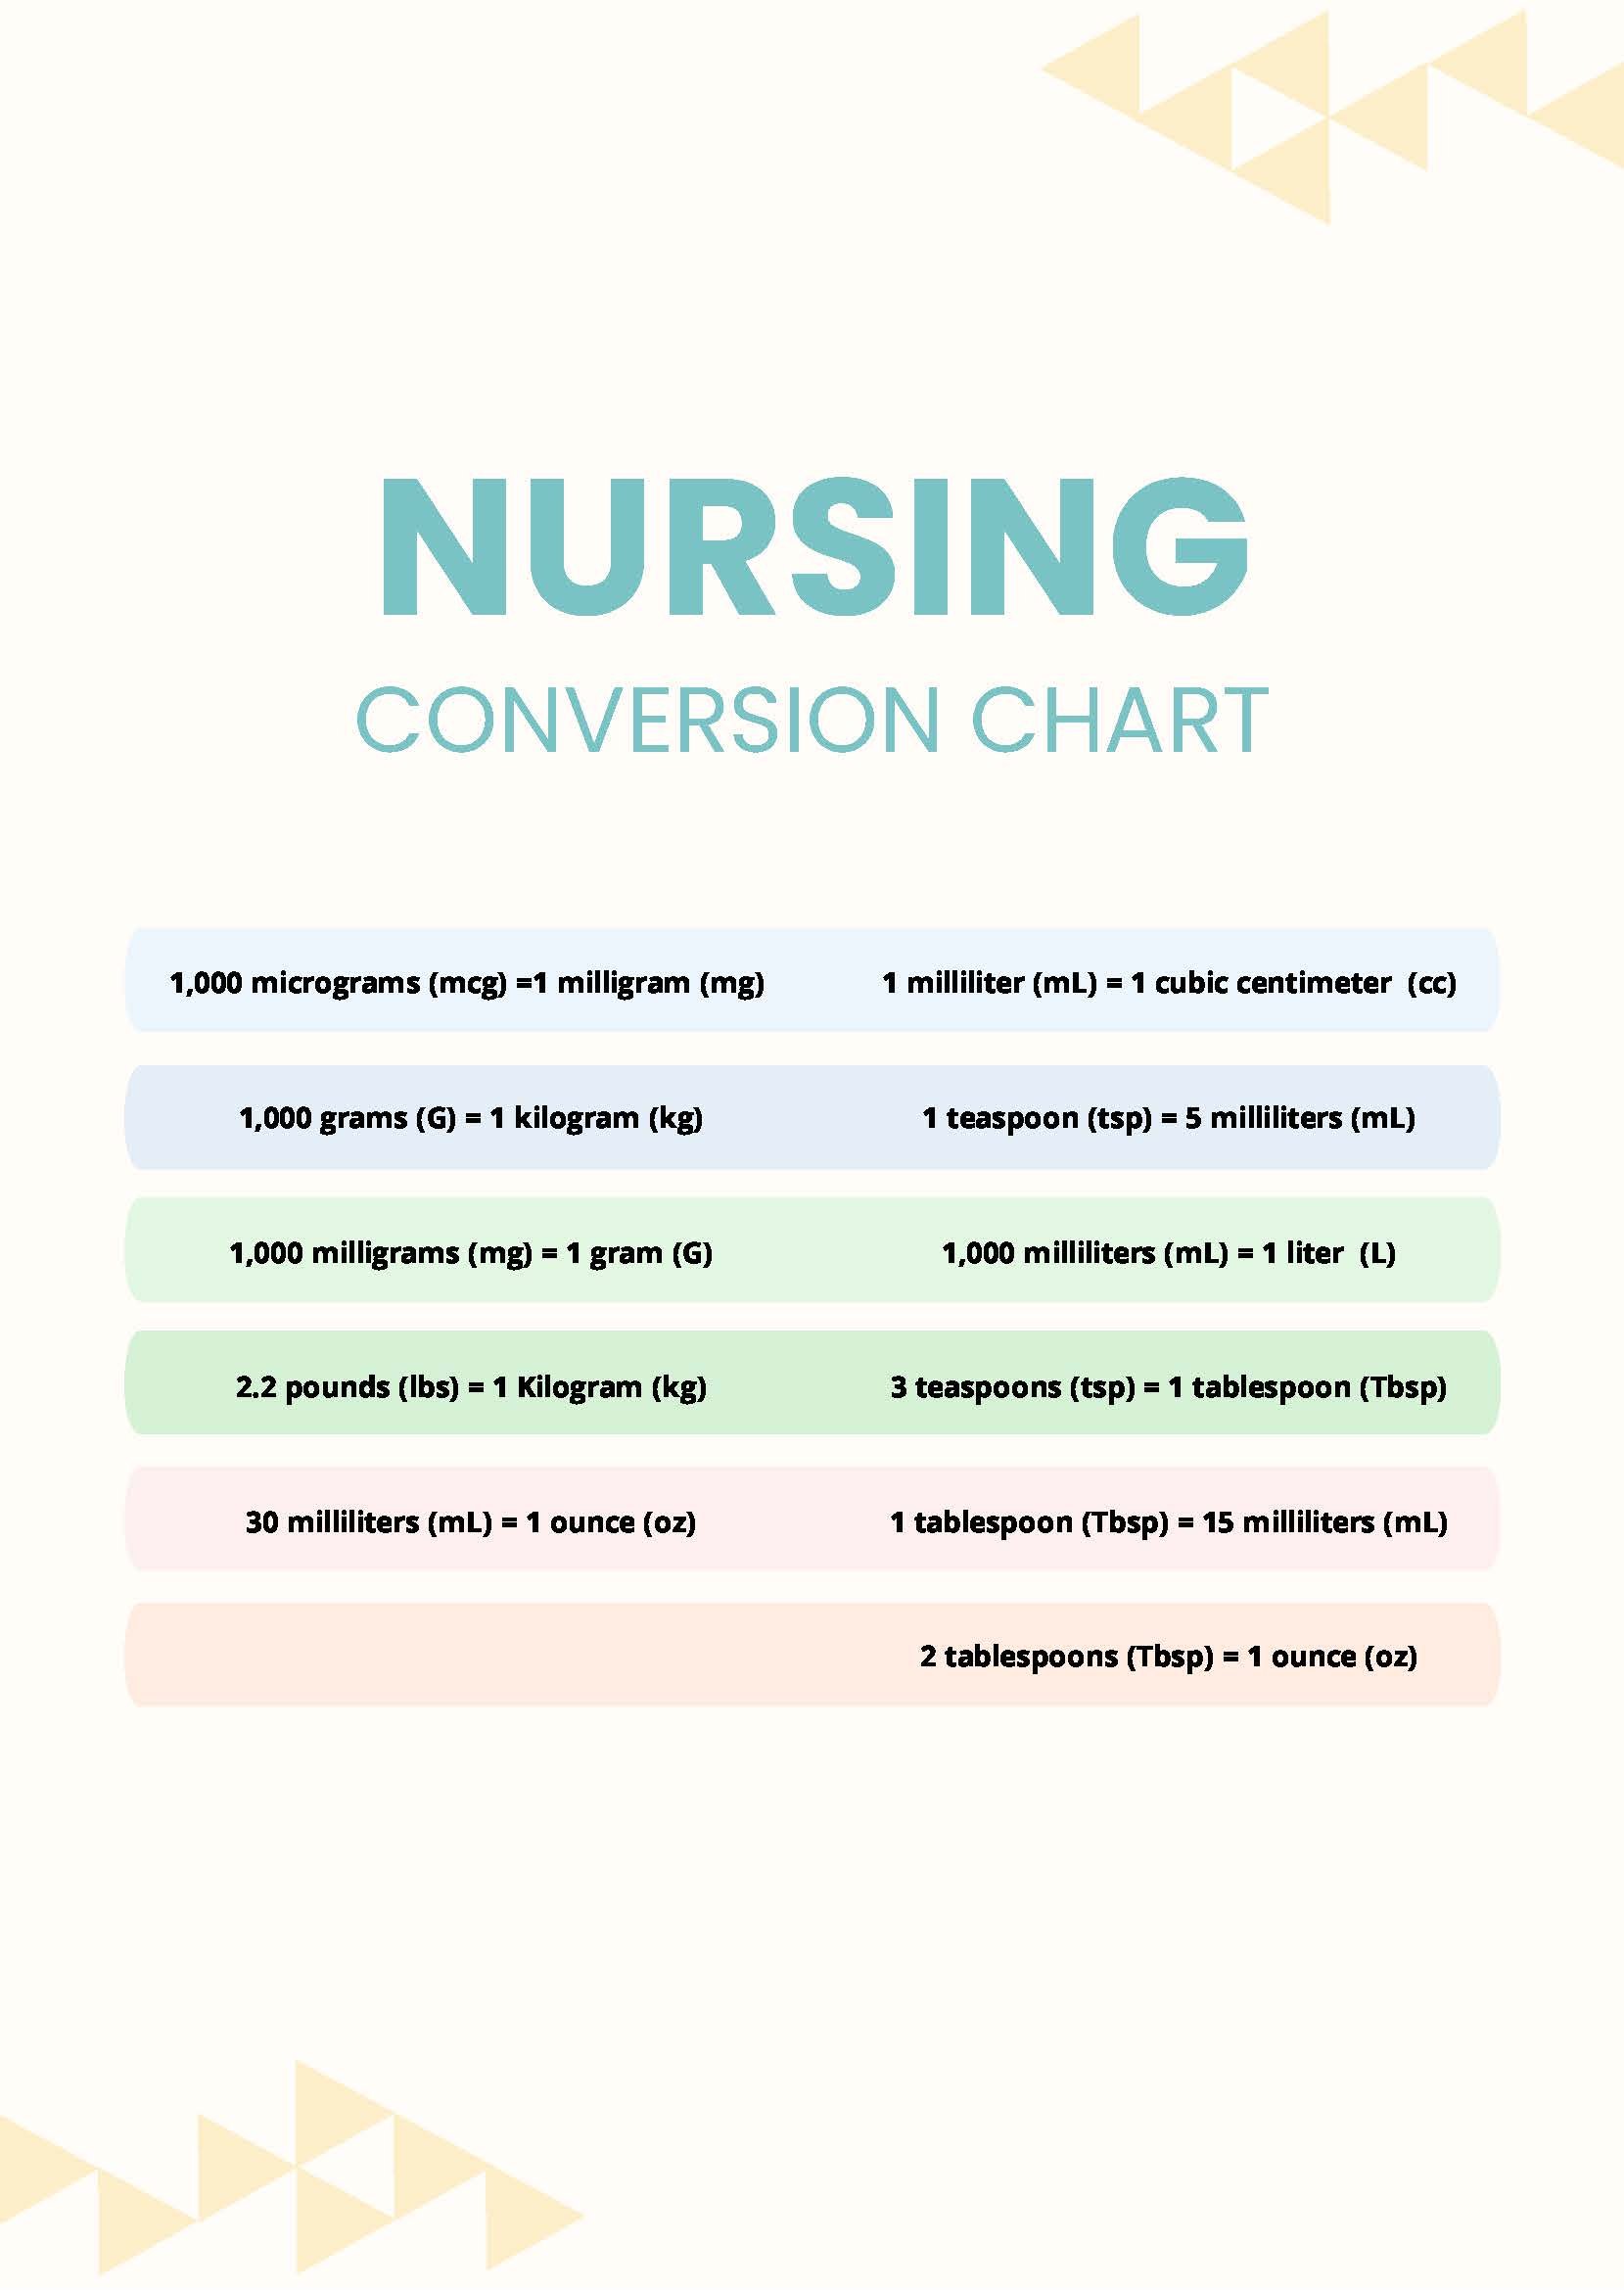 Nursing Conversion Chart in PDF